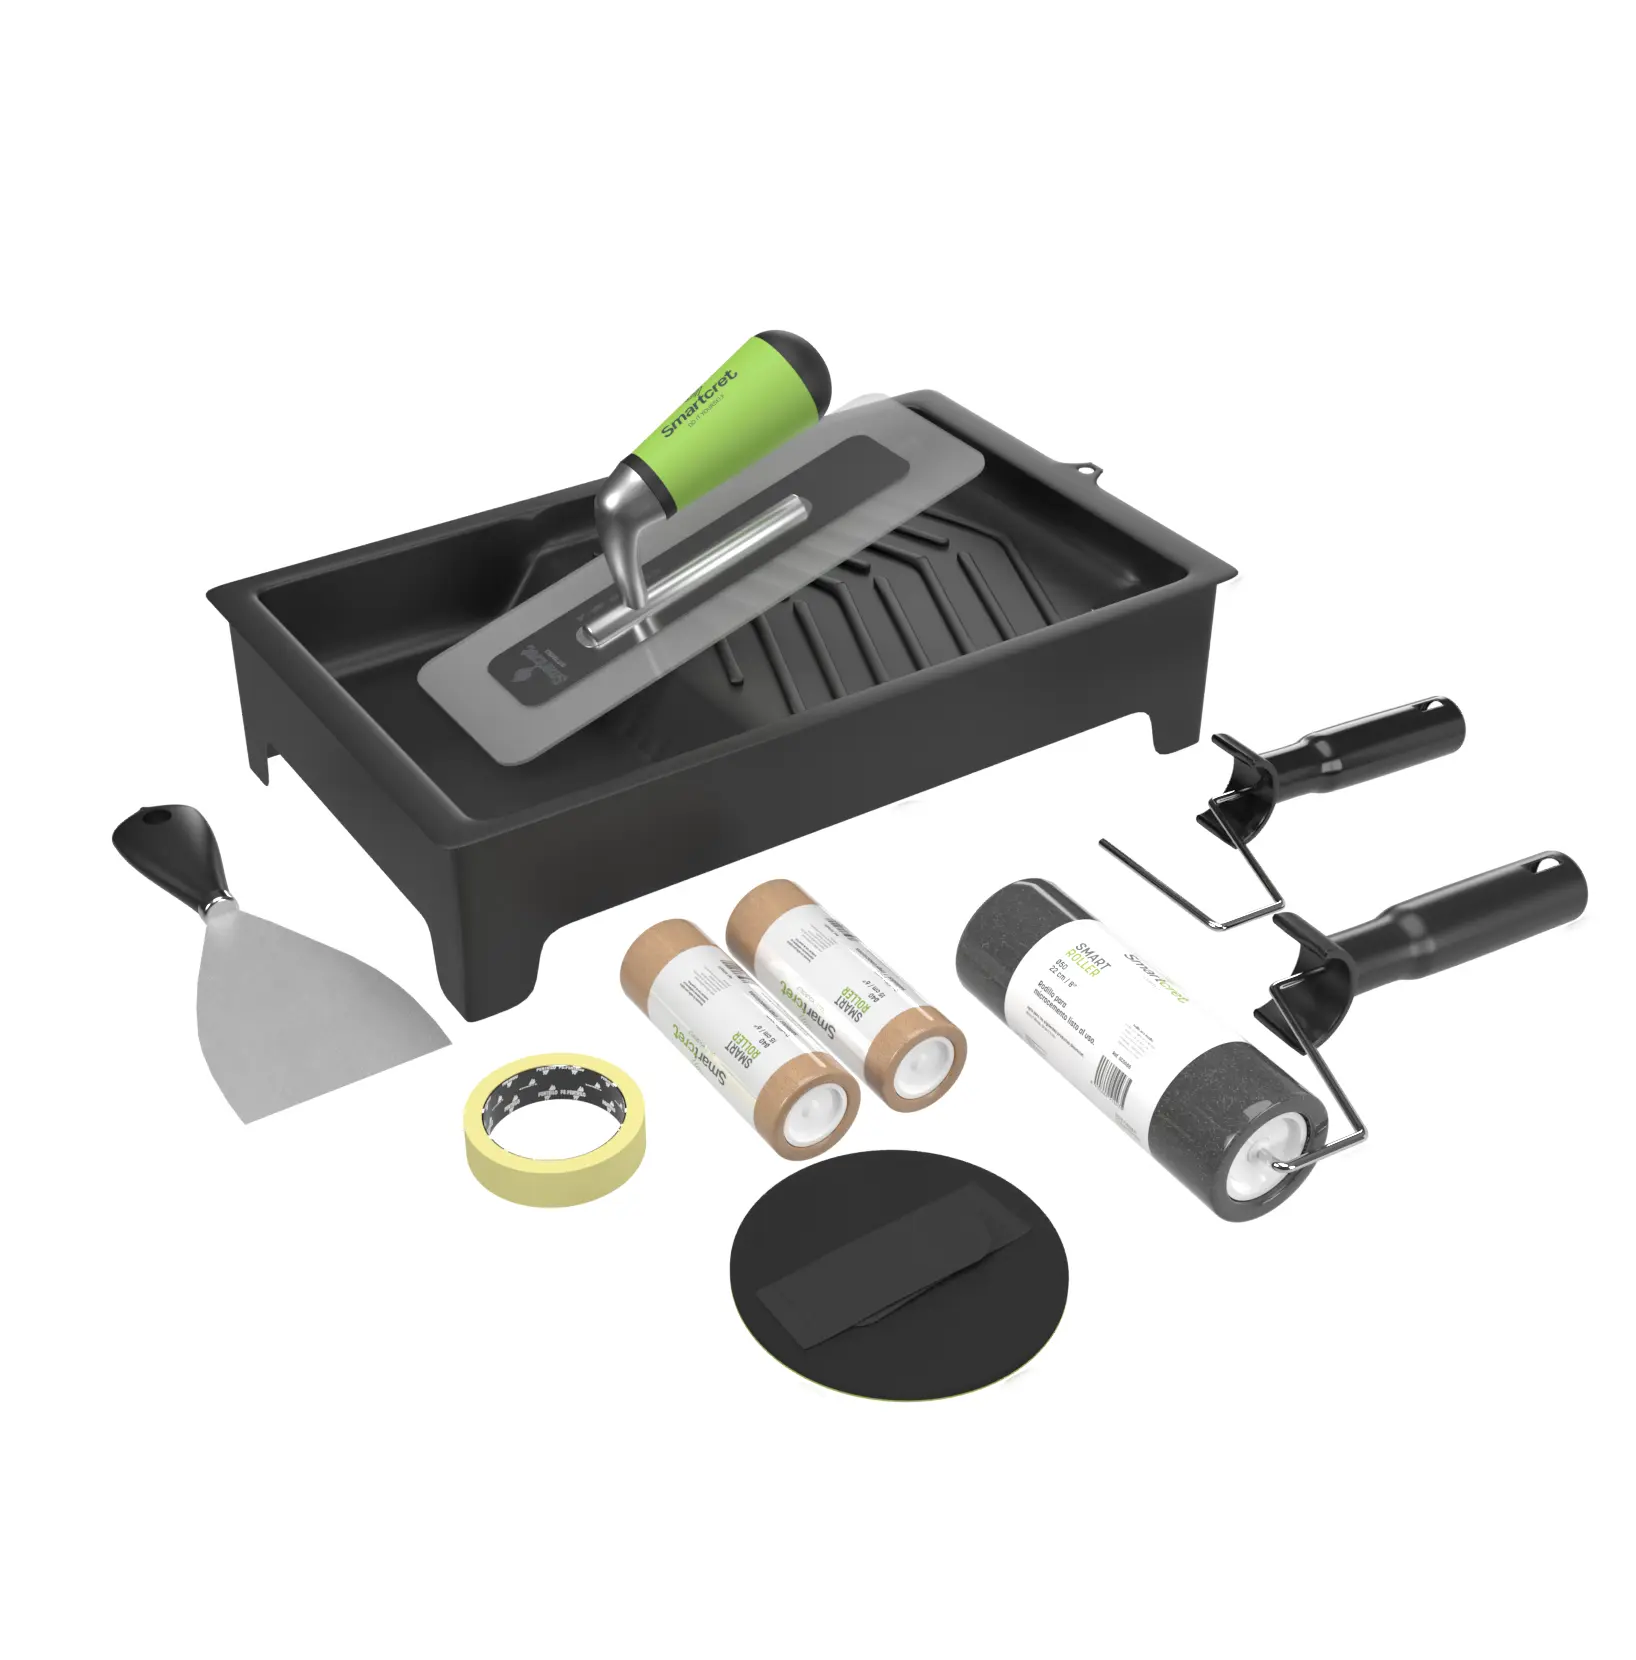 Kit de herramientas para microcemento